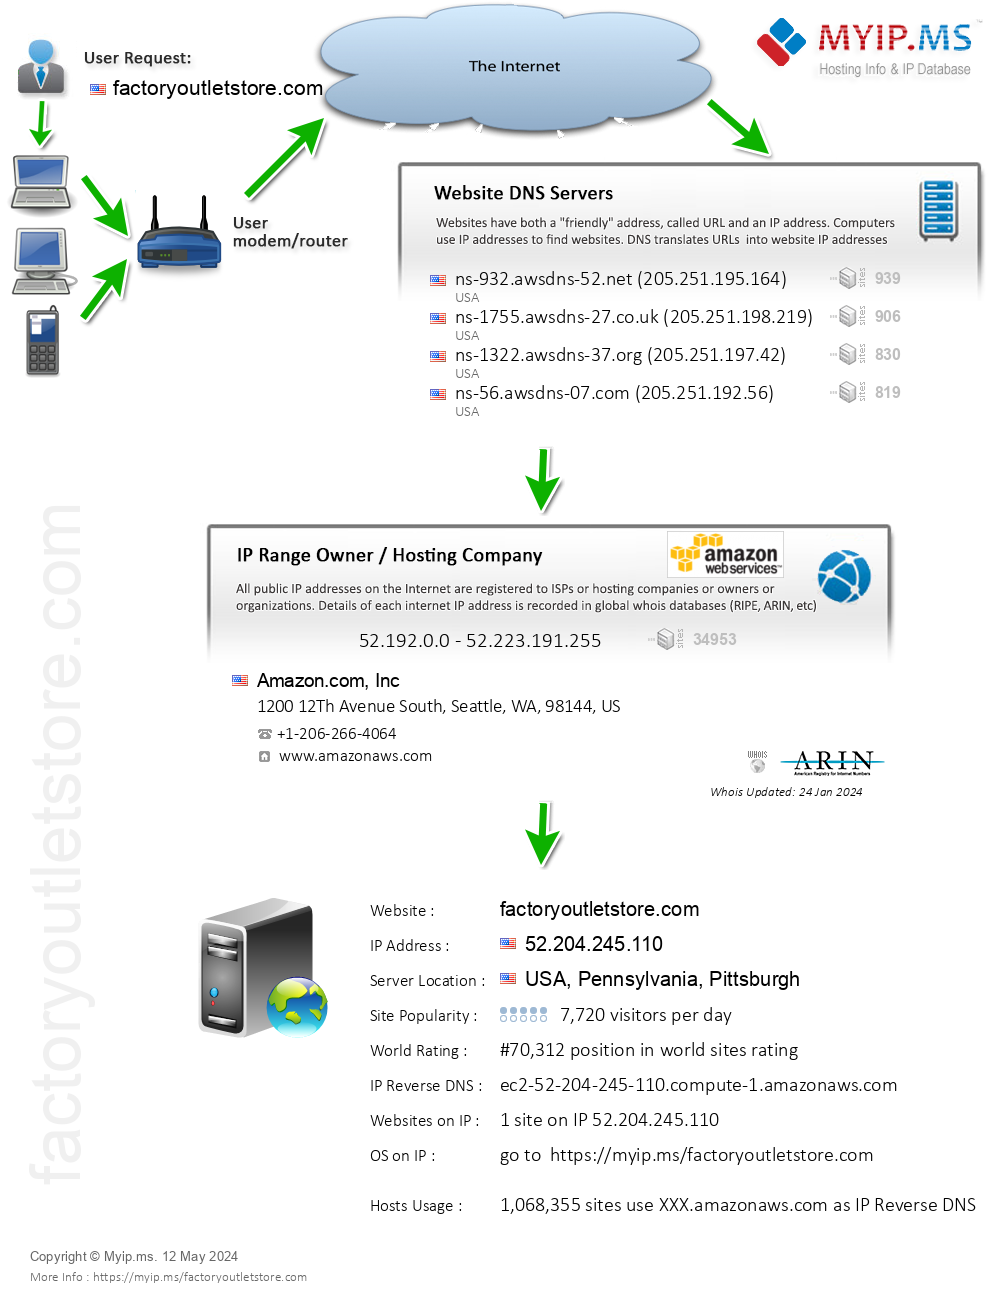 Factoryoutletstore.com - Website Hosting Visual IP Diagram